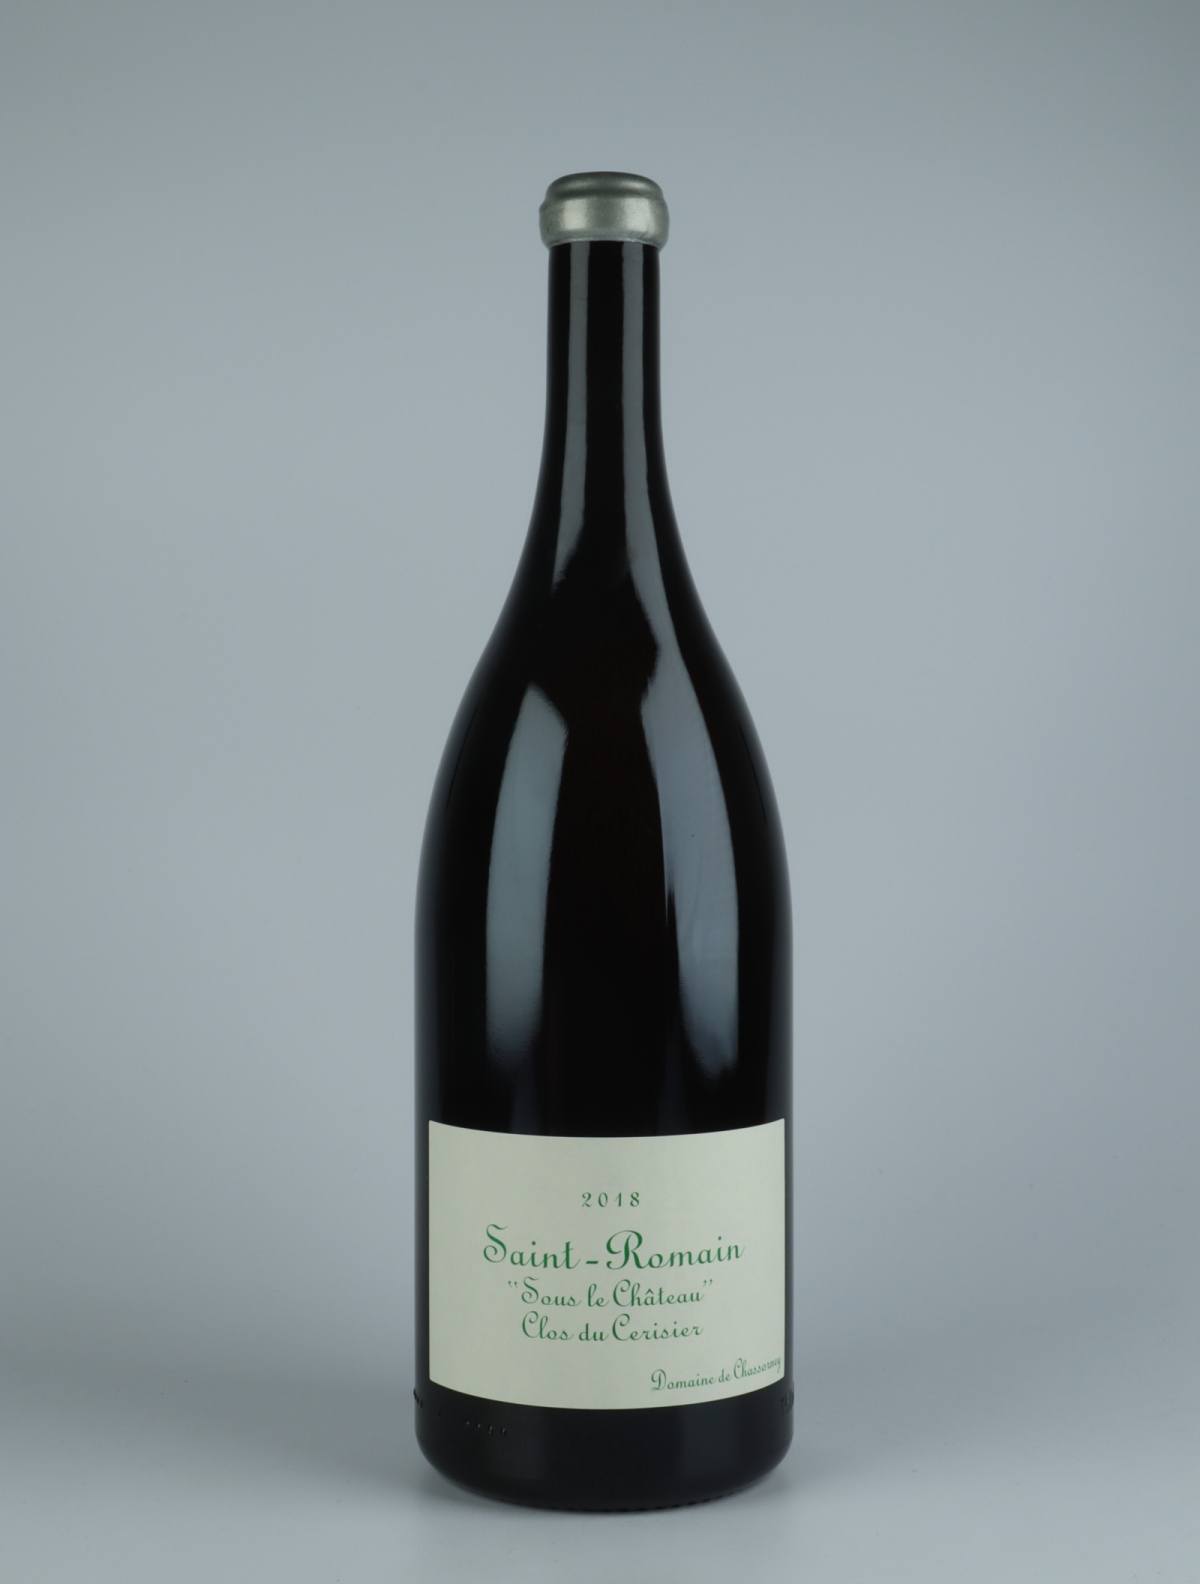 A bottle 2018 Saint Romain Blanc - Clos du Cerisier White wine from Domaine de Chassorney, Burgundy in France